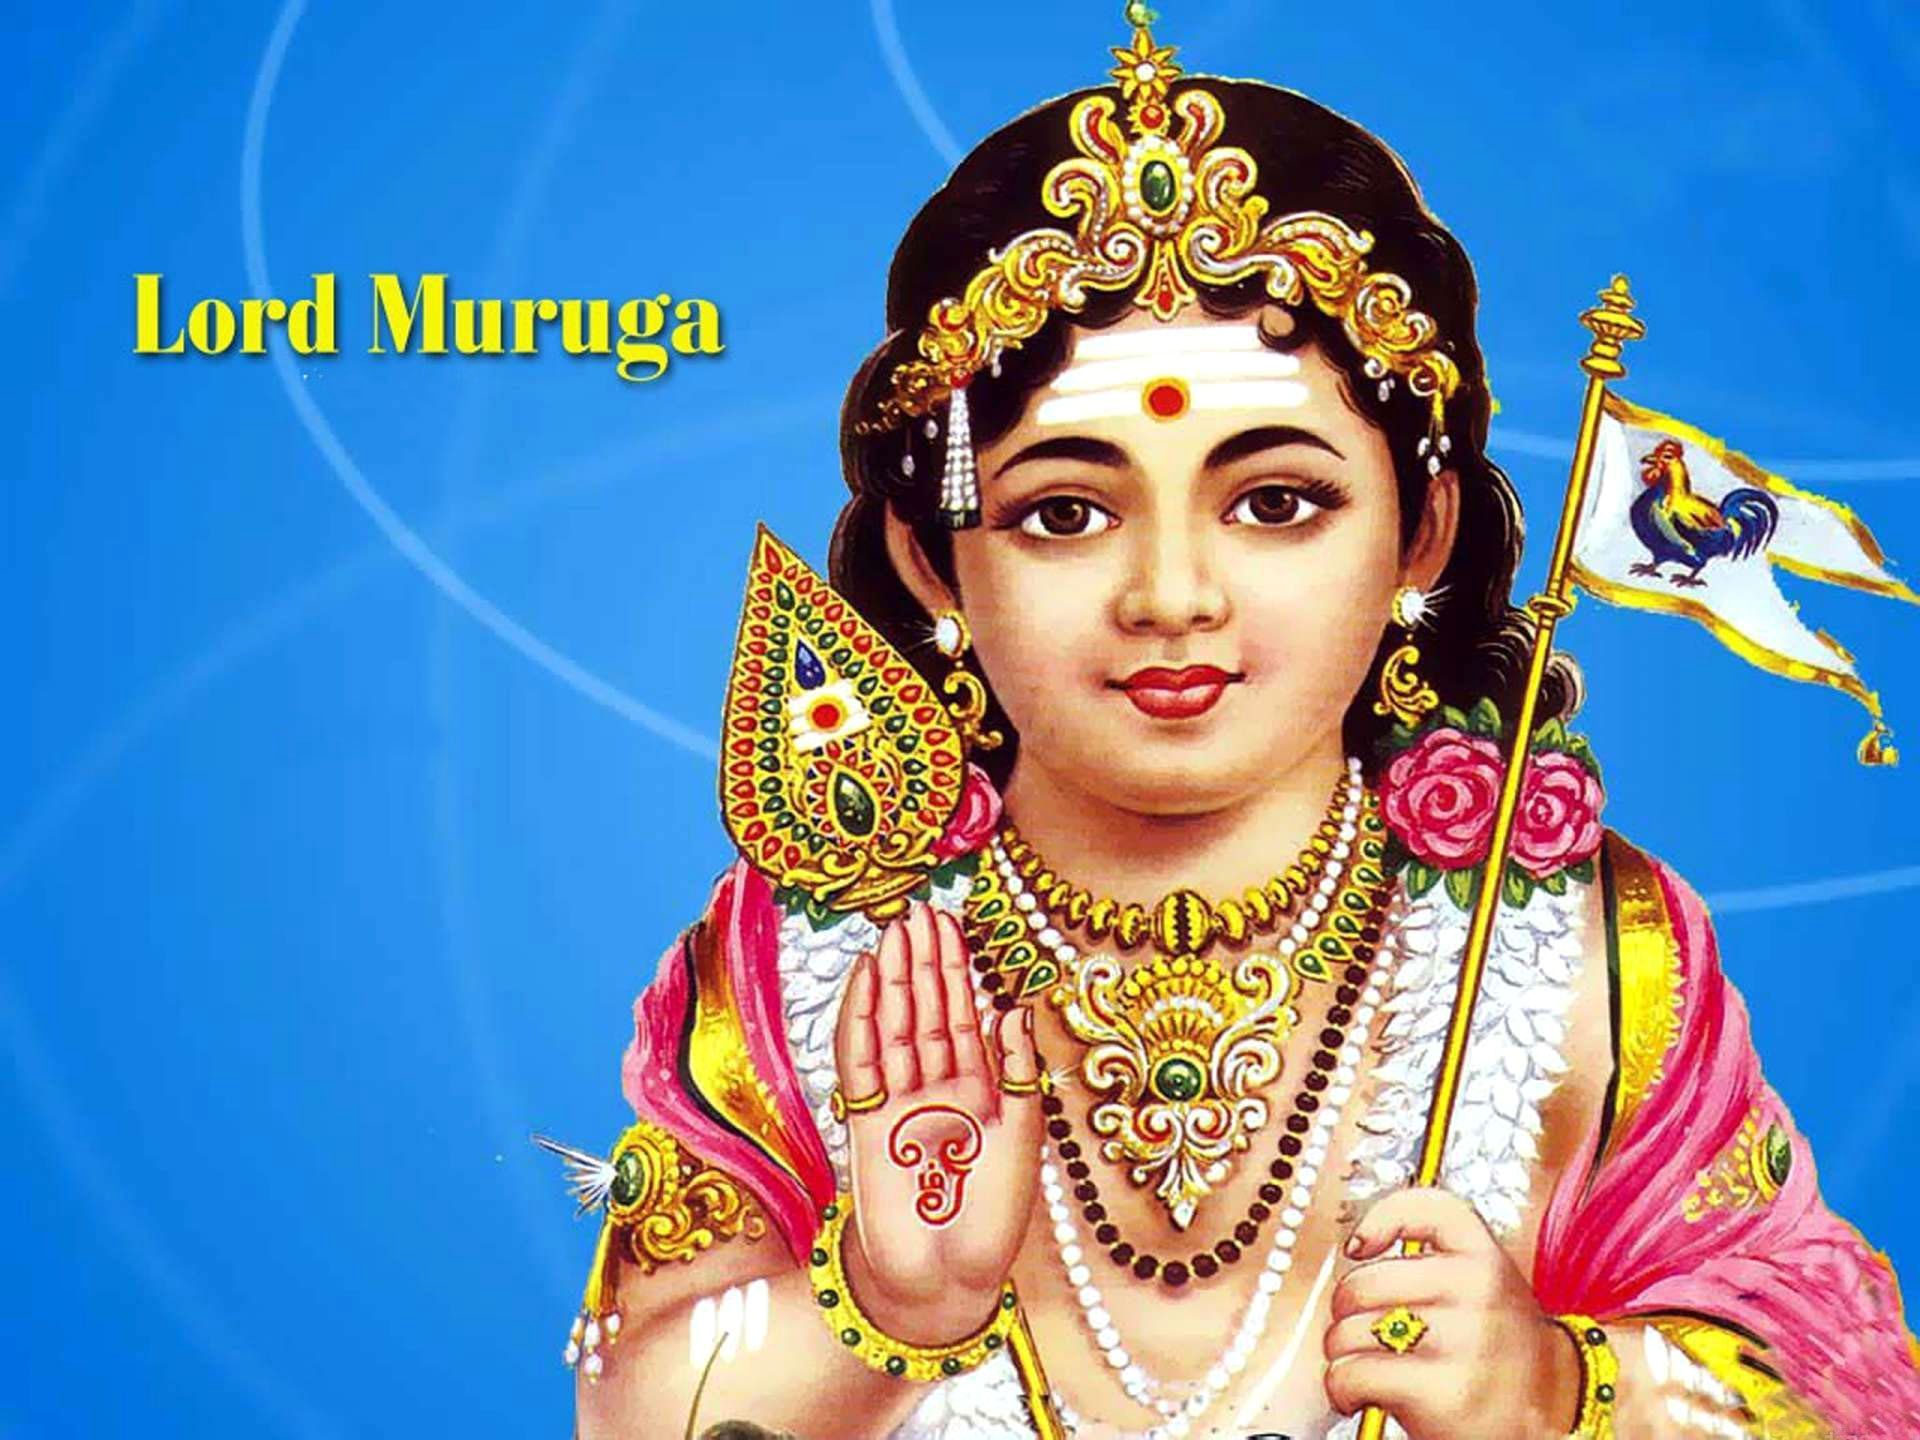 Lord Murugan Wallpapers, photos & images download